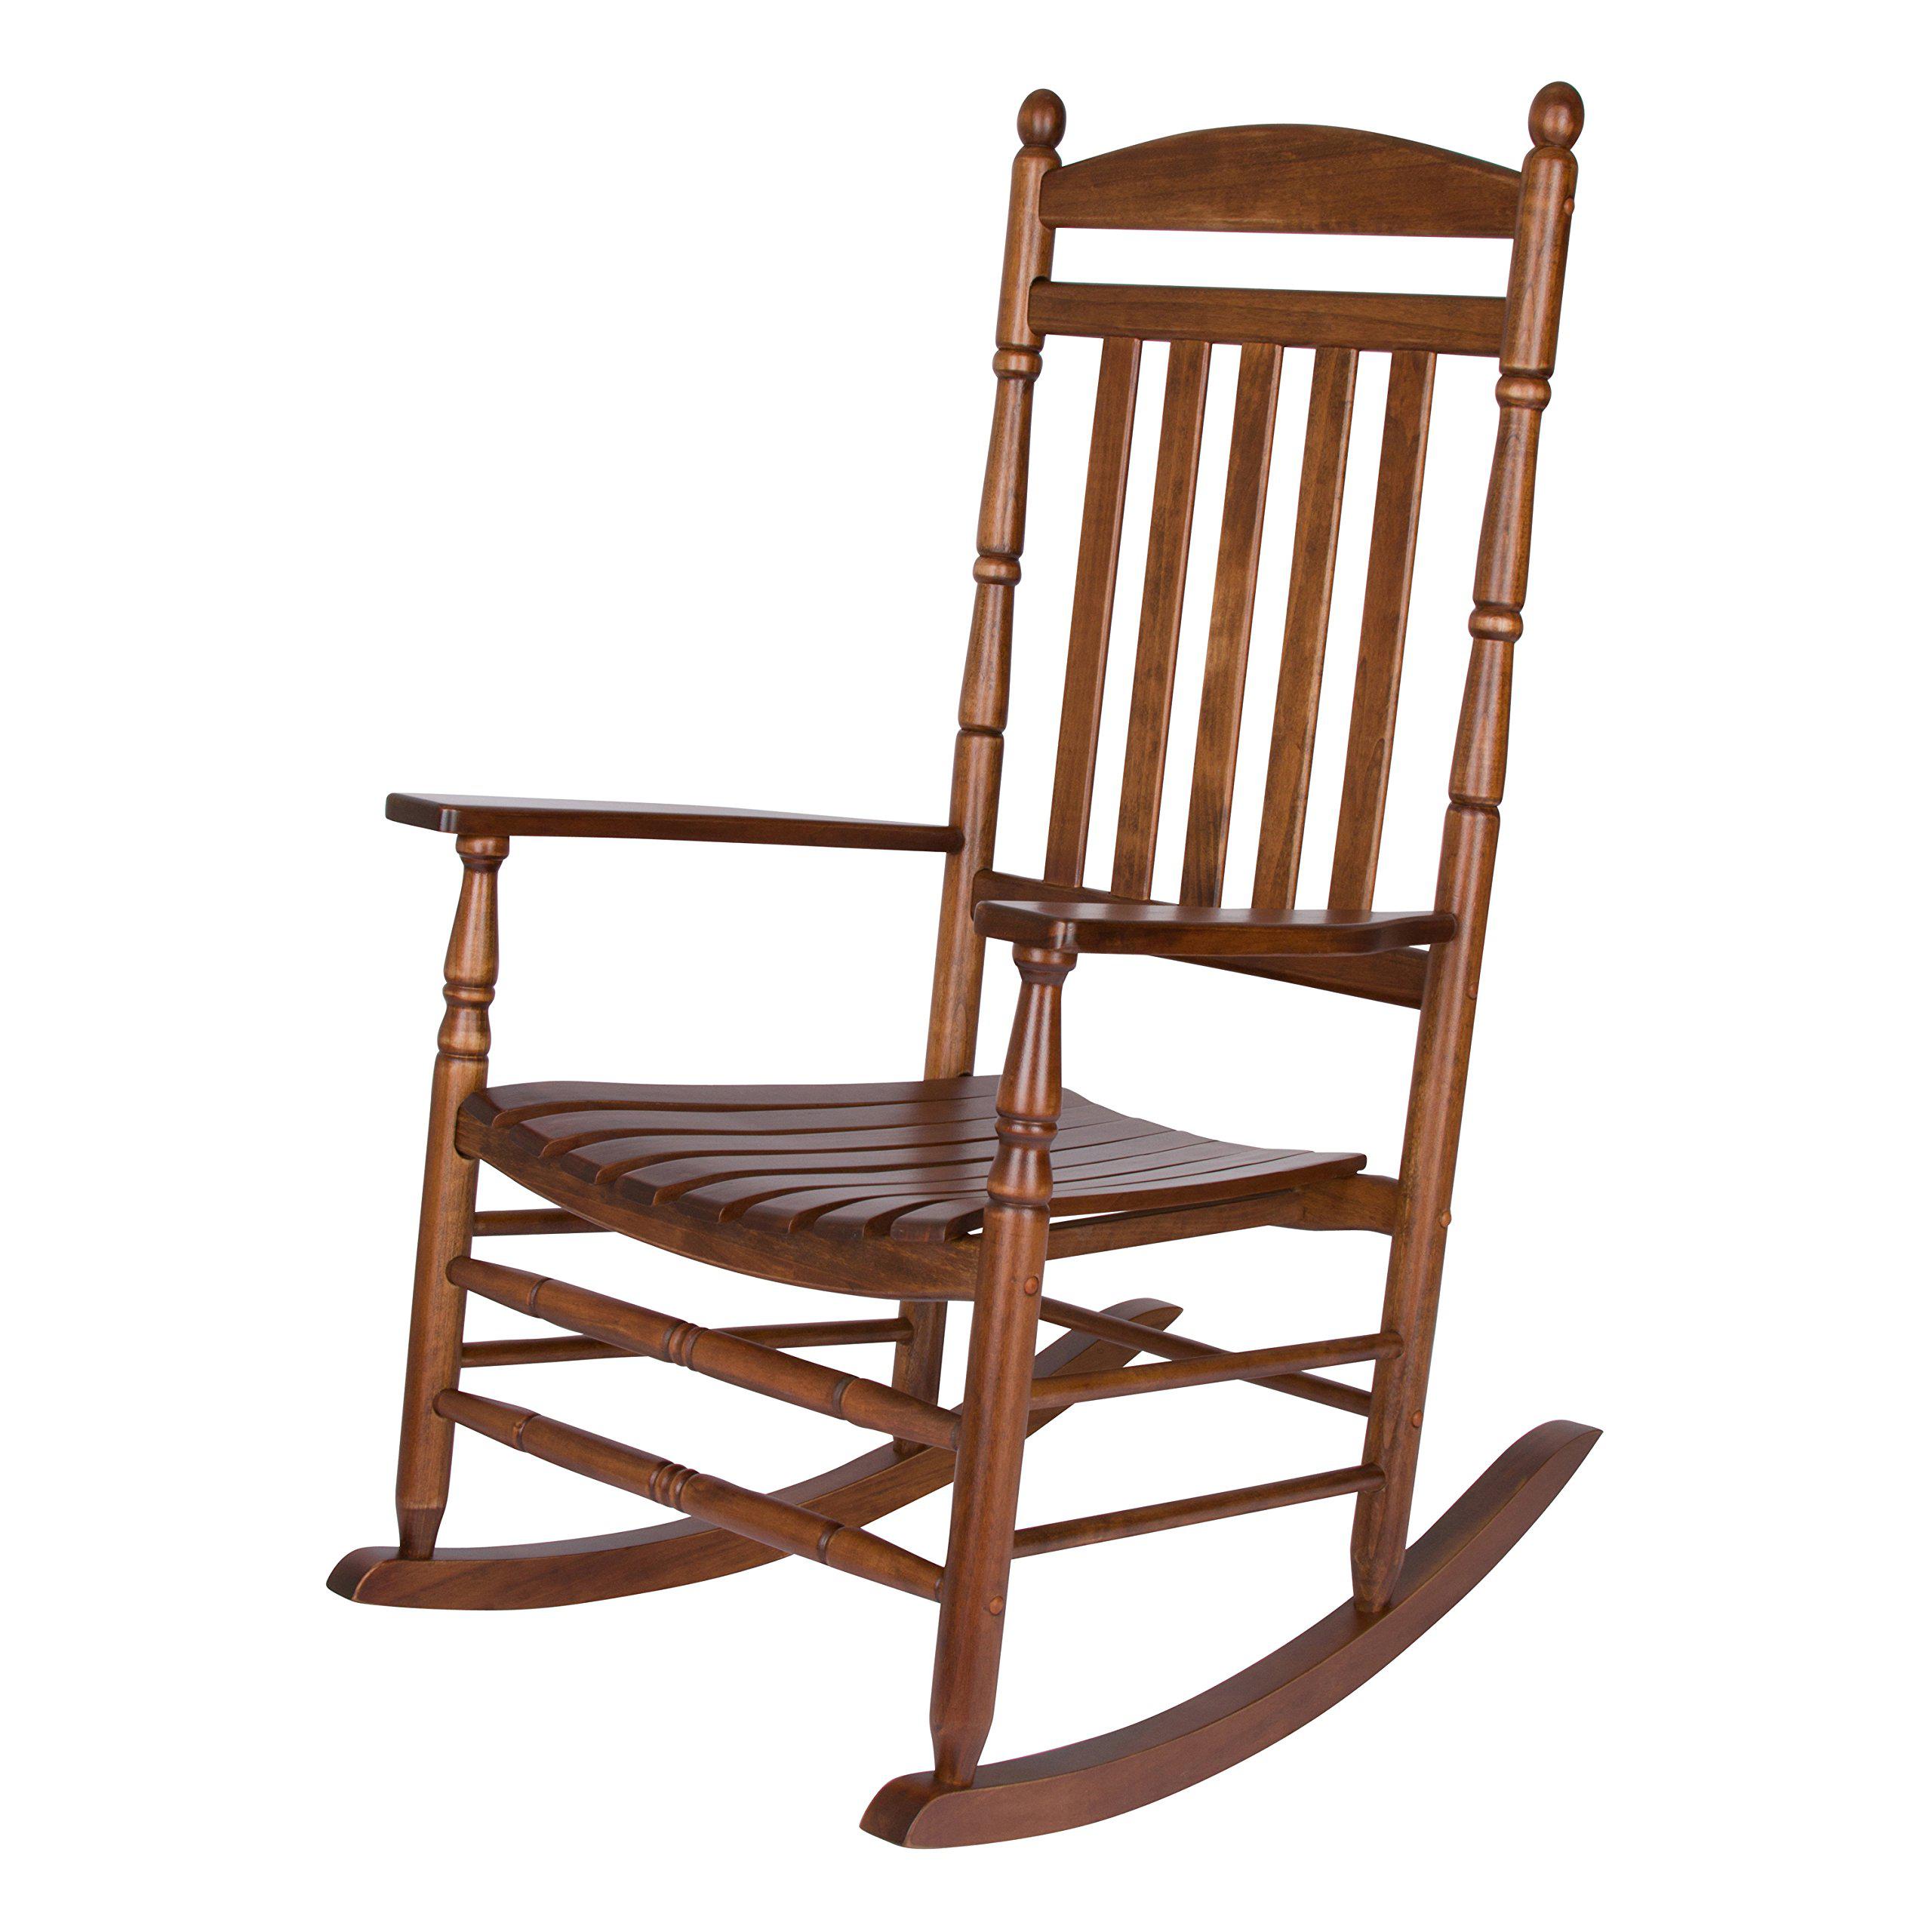 shine company 4333oa rhode island front porch rocker | comfortable outdoor wood rocking chair for indoor/outdoor - oak